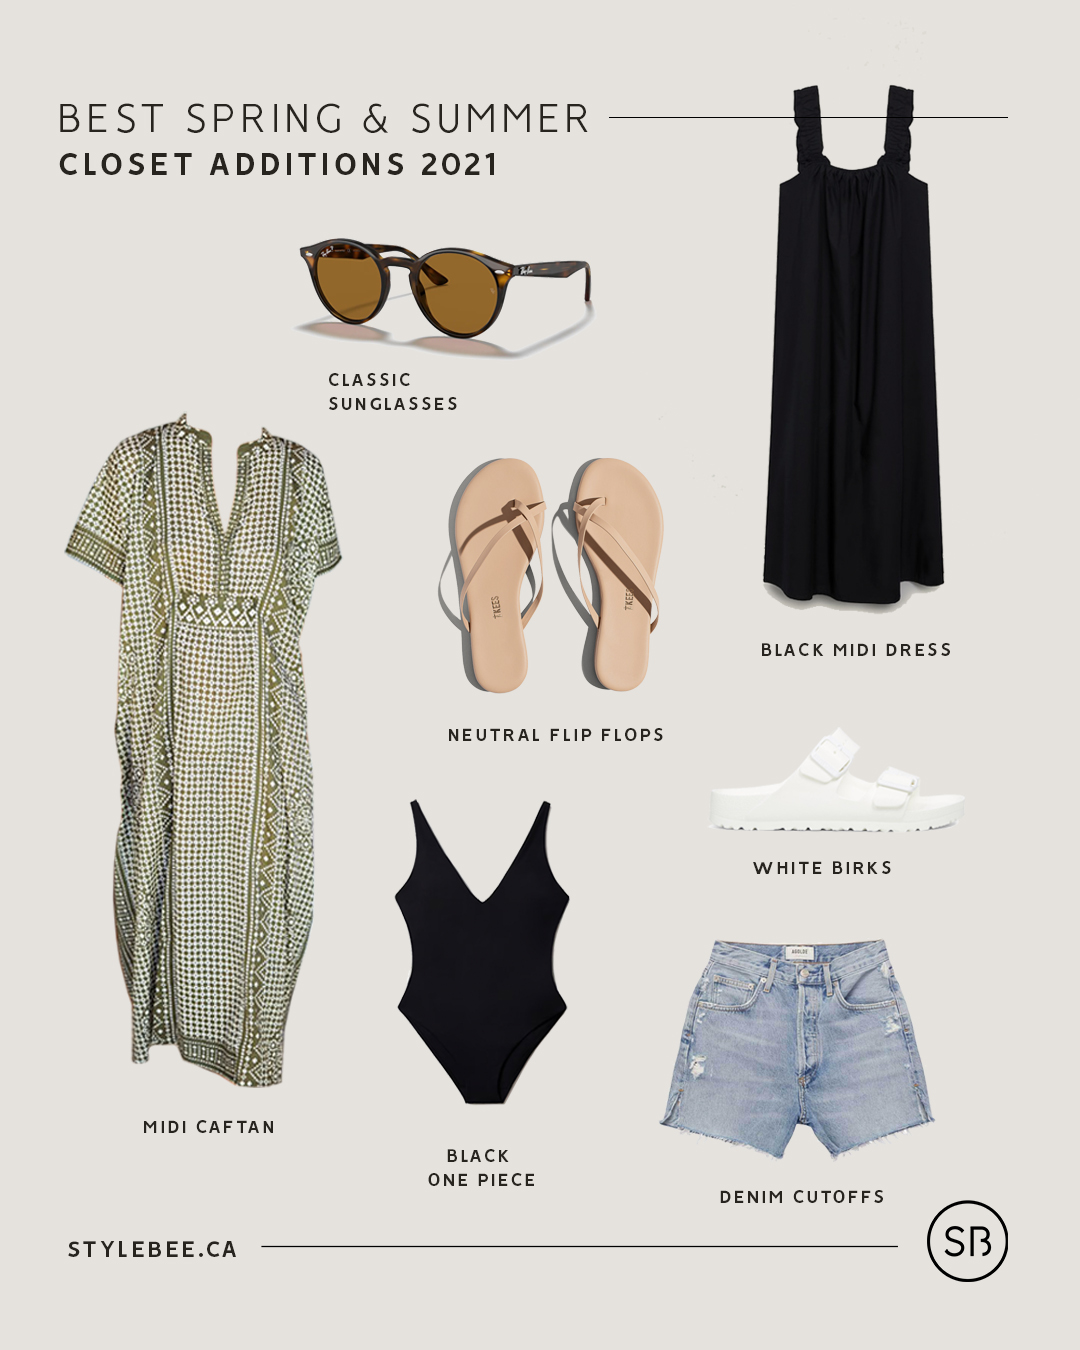 My 2021 Spring Capsule Wardrobe - By Charlotte B